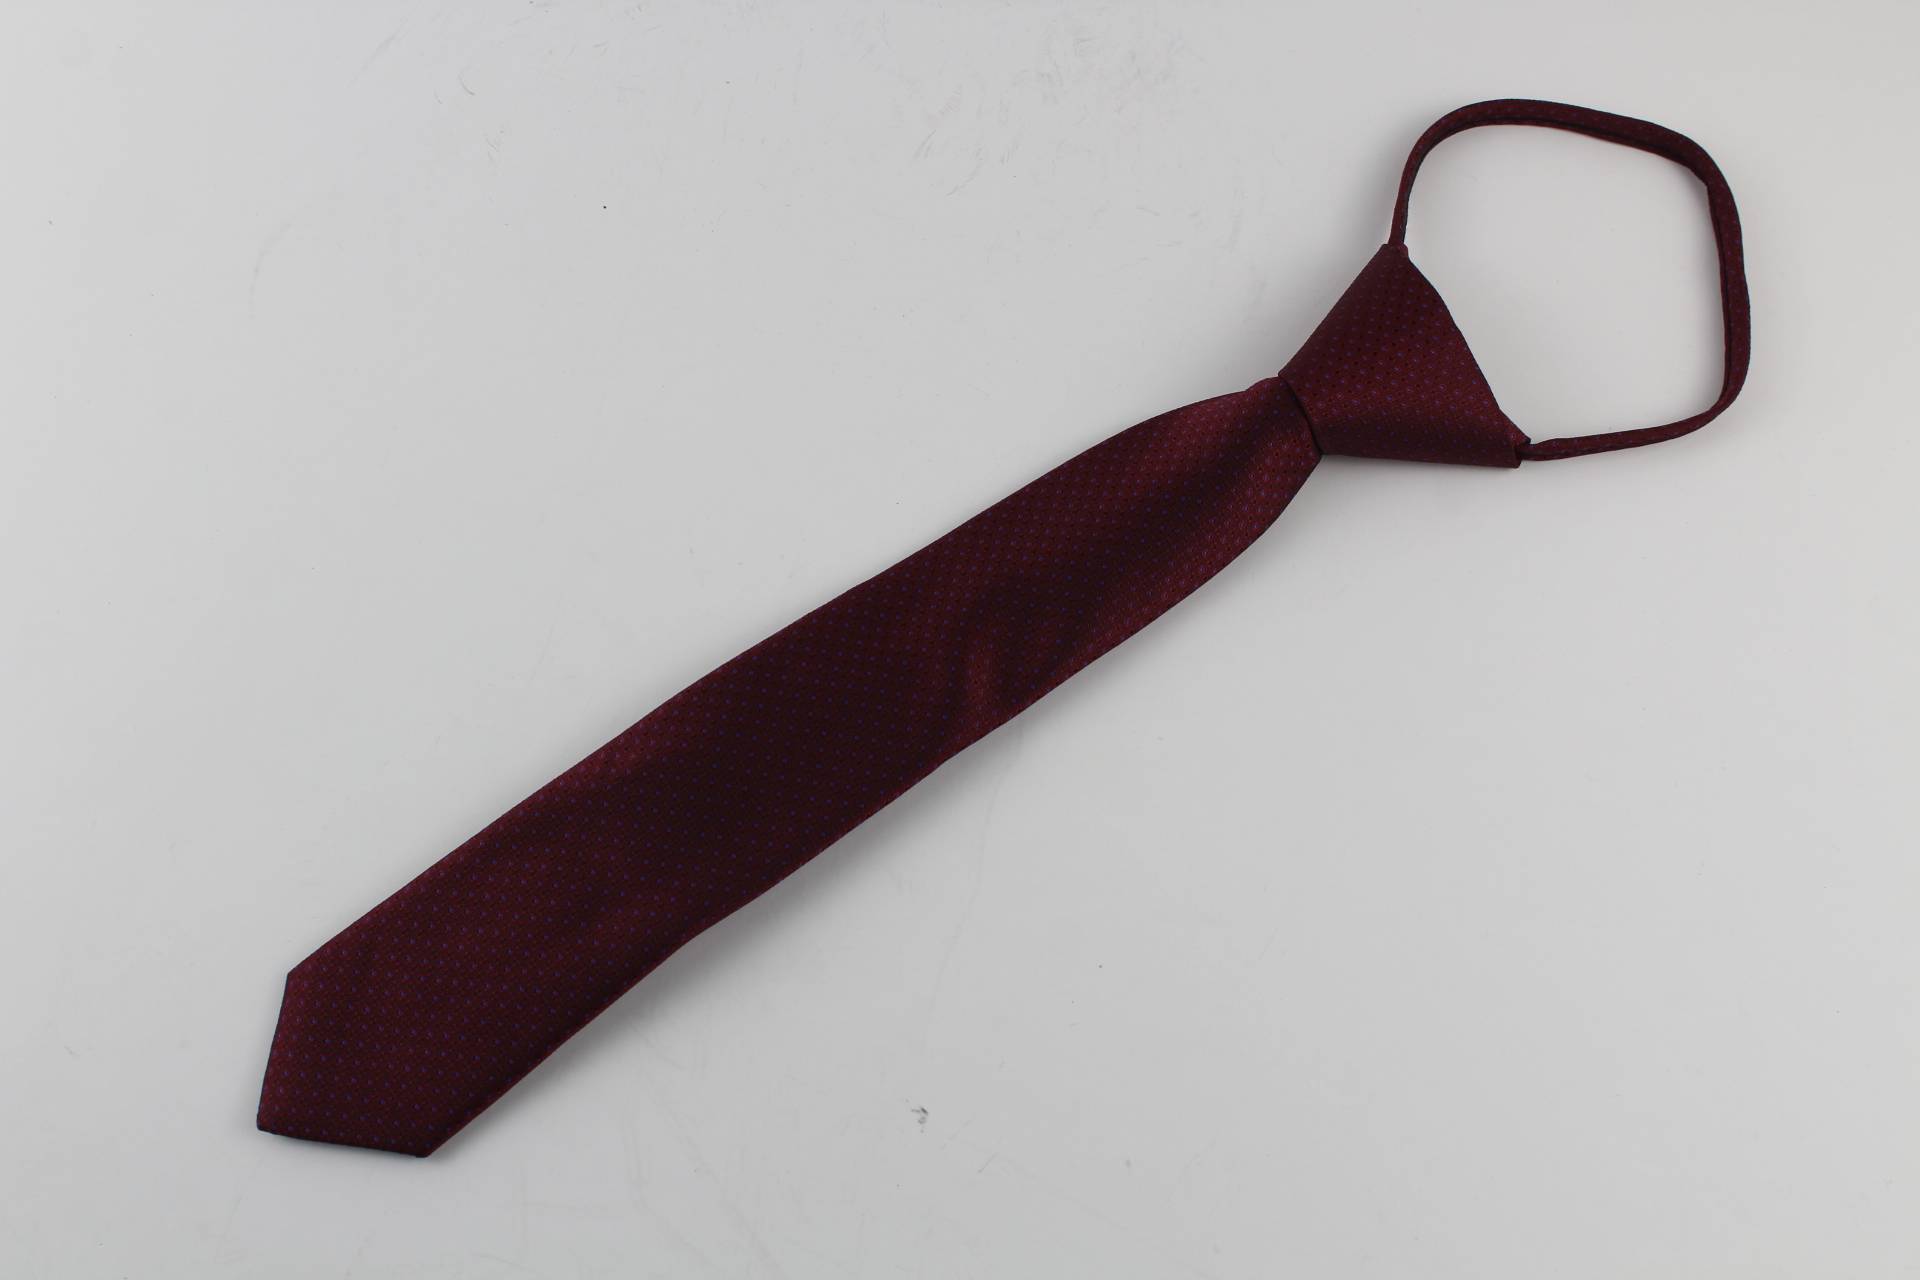 Сколько стоит галстук и от чего зависит цена на аксессуар?